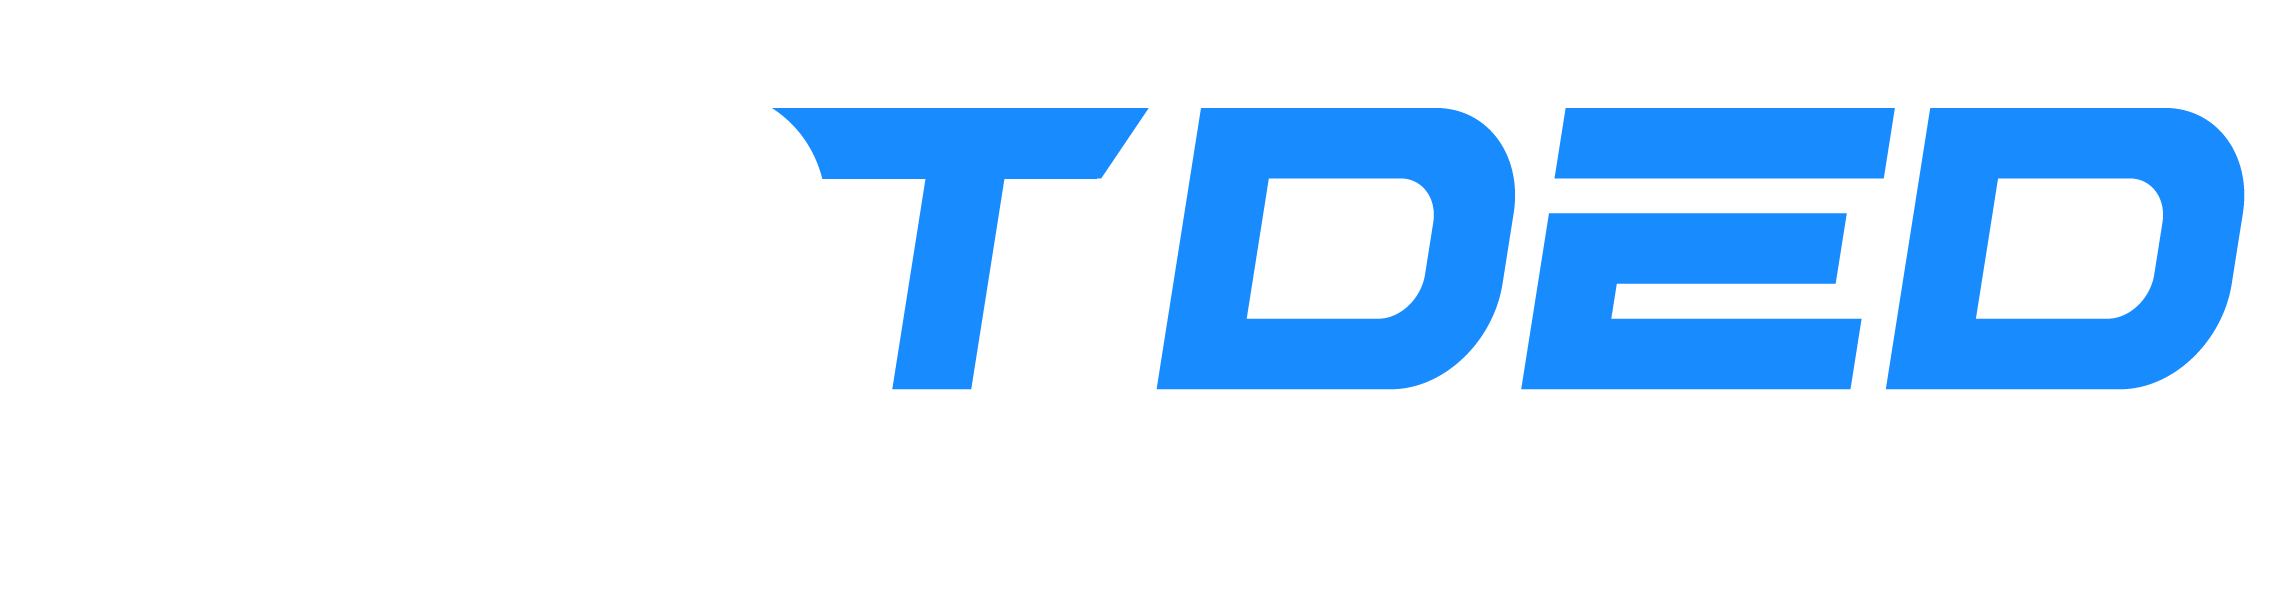 99tded logo